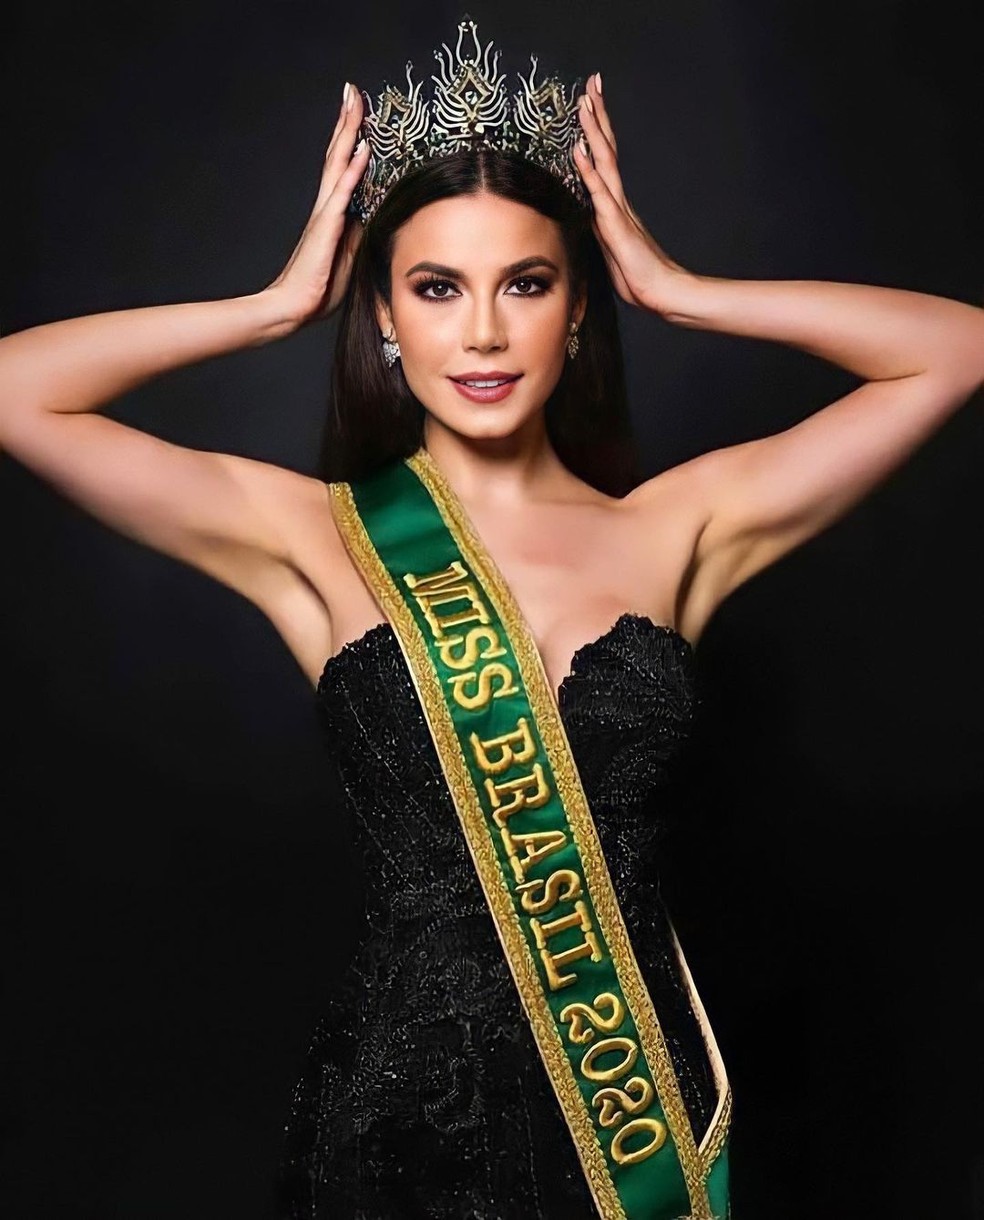 Favorita, Júlia Gama conquista vaga no Miss Universo Manaus Pop